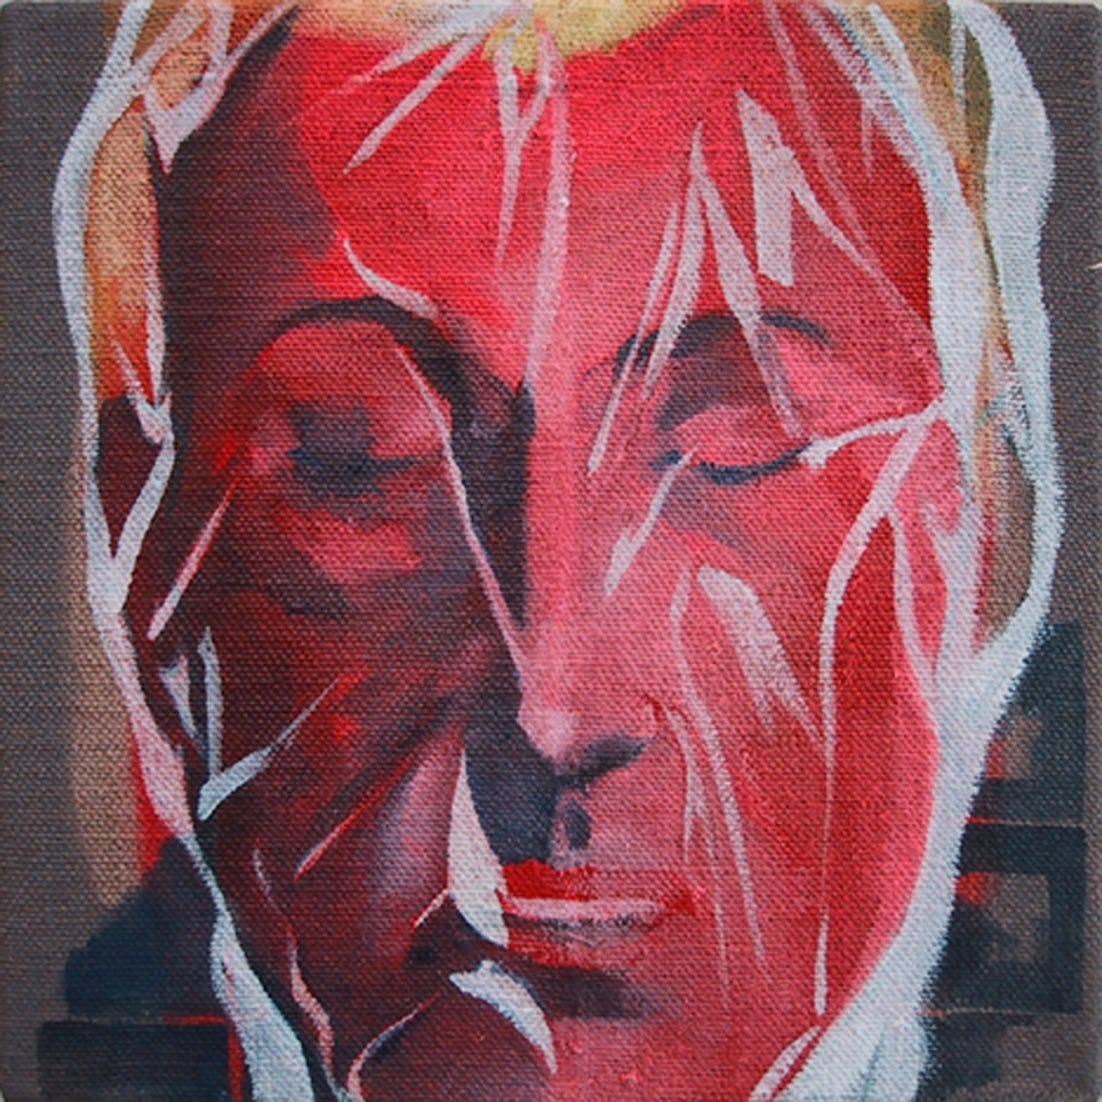 25x25 cm, oil on canvas, 2003